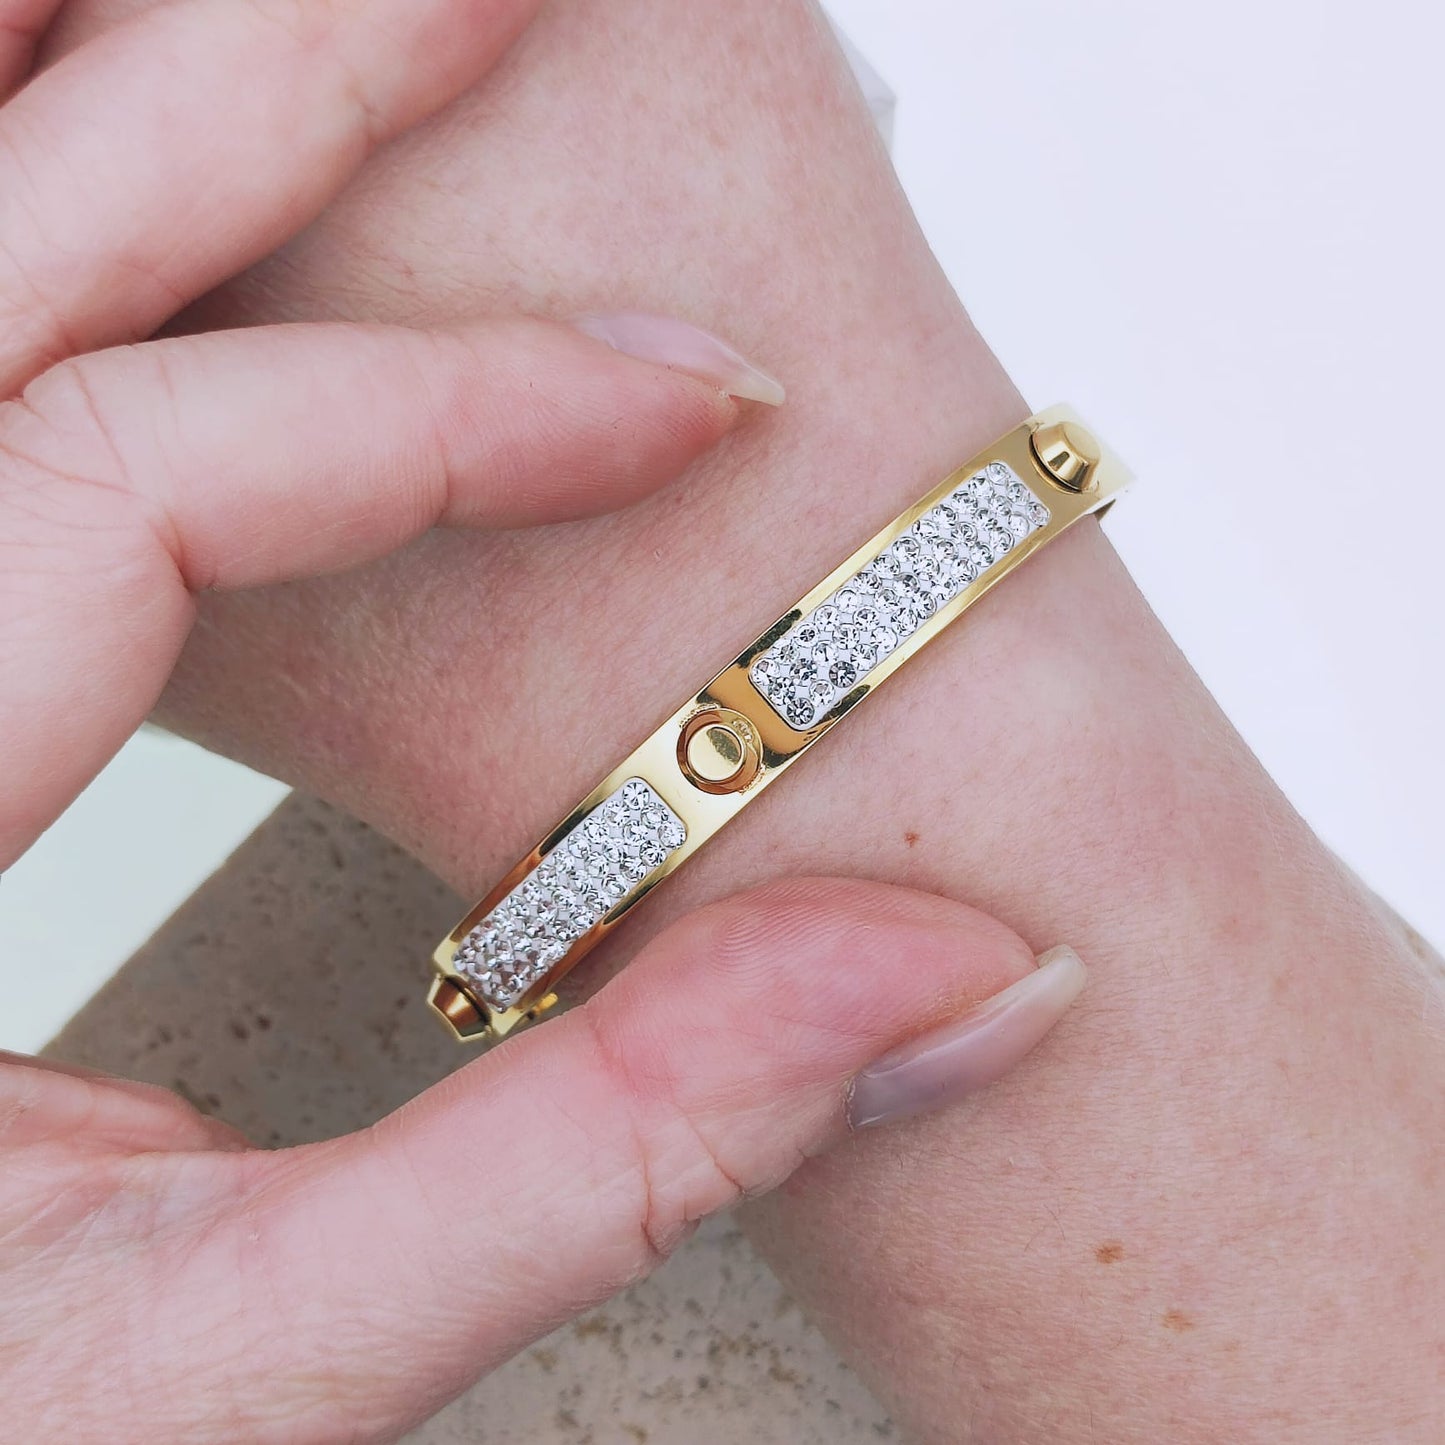 18k gold plated stainless steel half spikes crystal bangle bracelet - Mia Ishaaq